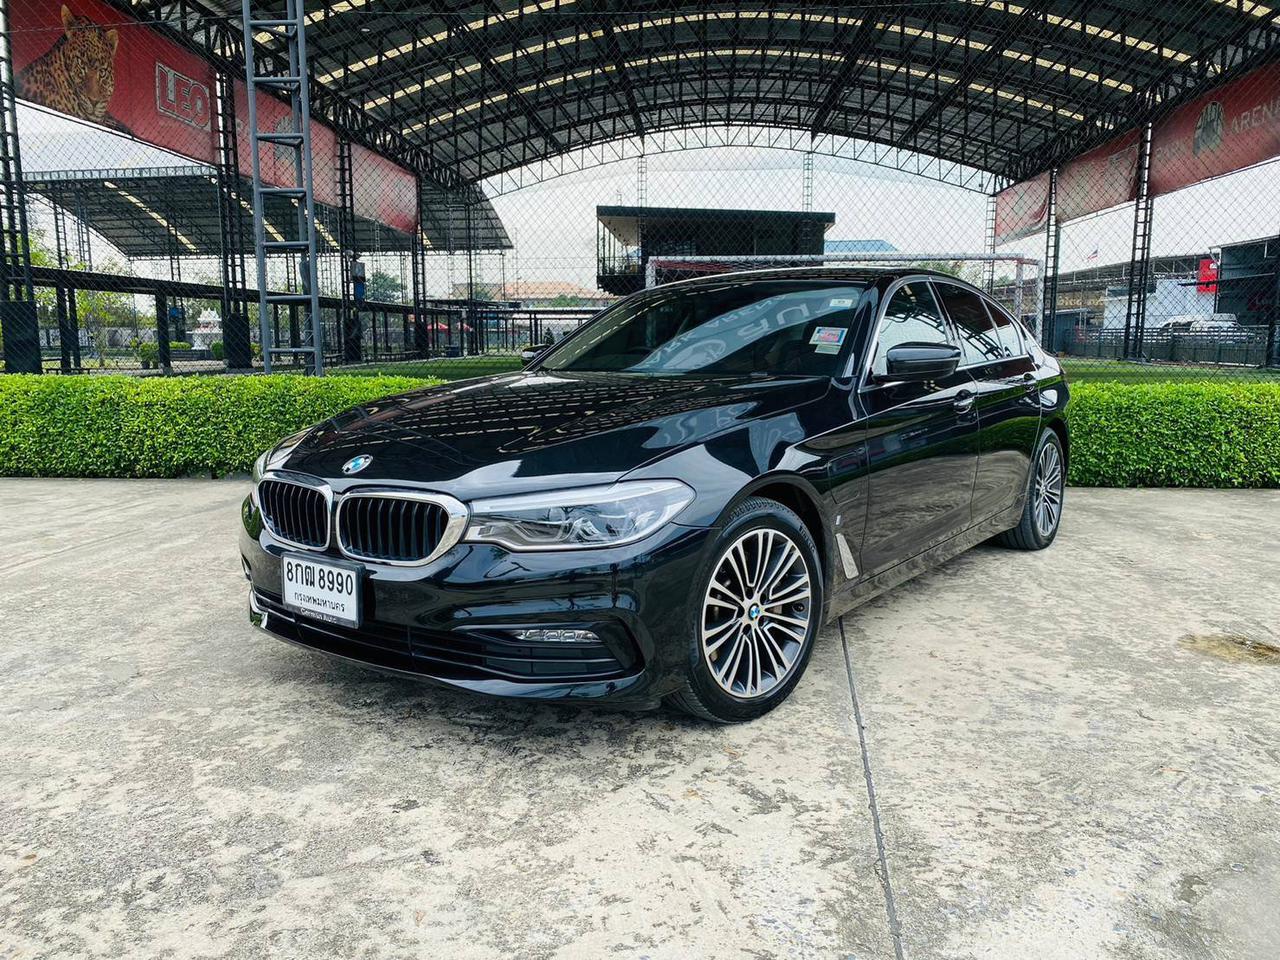 2019 BMW Series5 530e 2.0 Highline (G30) ฟรีดาวน์ ดอกเบี้ยเริ่มต้น 0% 12 เดือน